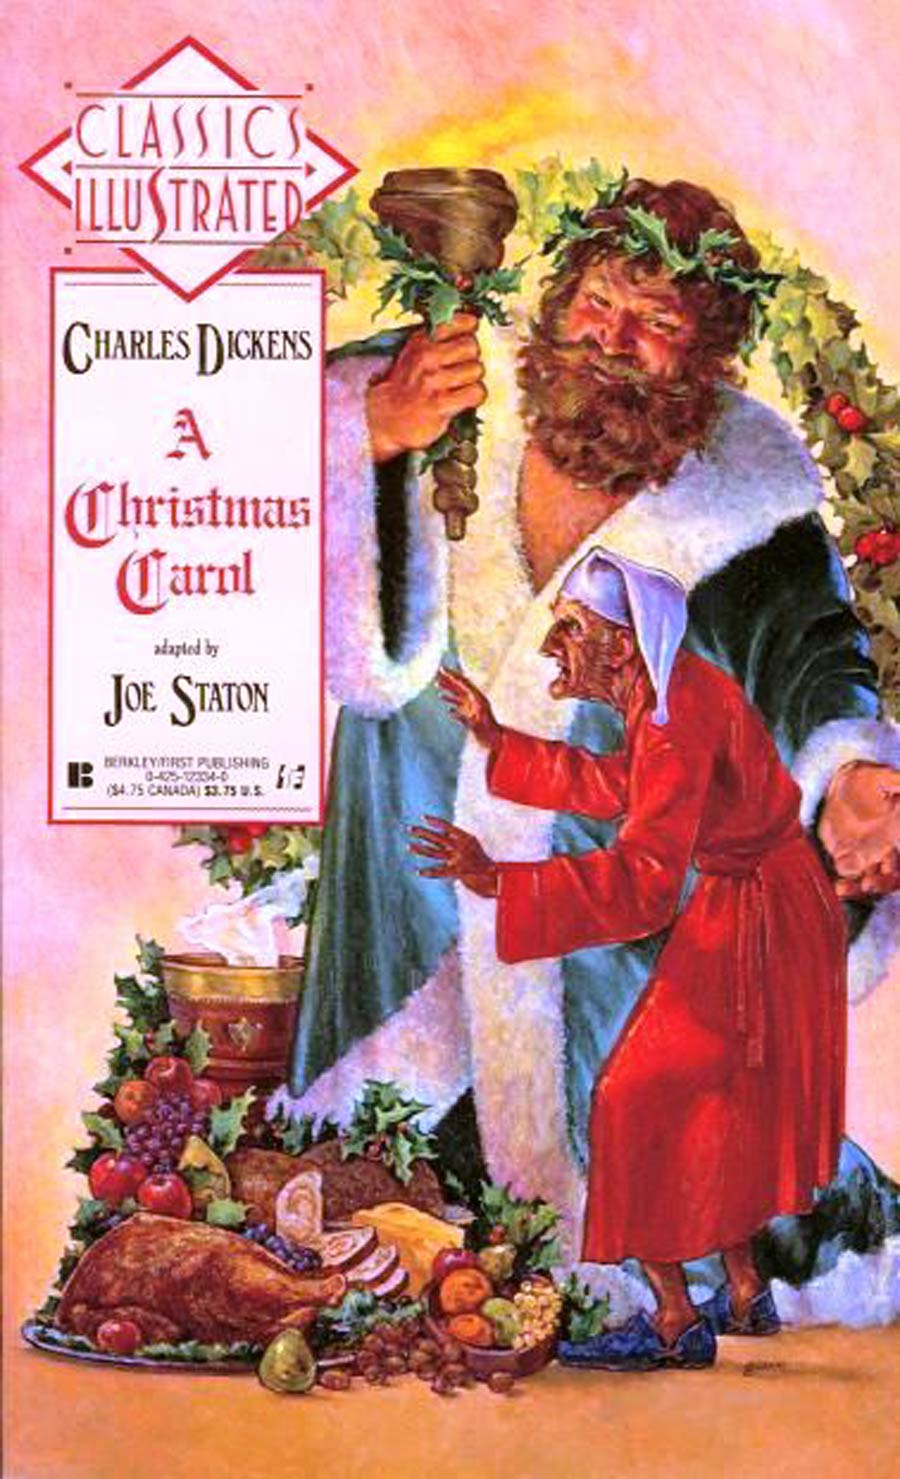 Classics Illustrated Vol 2 #16 A Christmas Carol